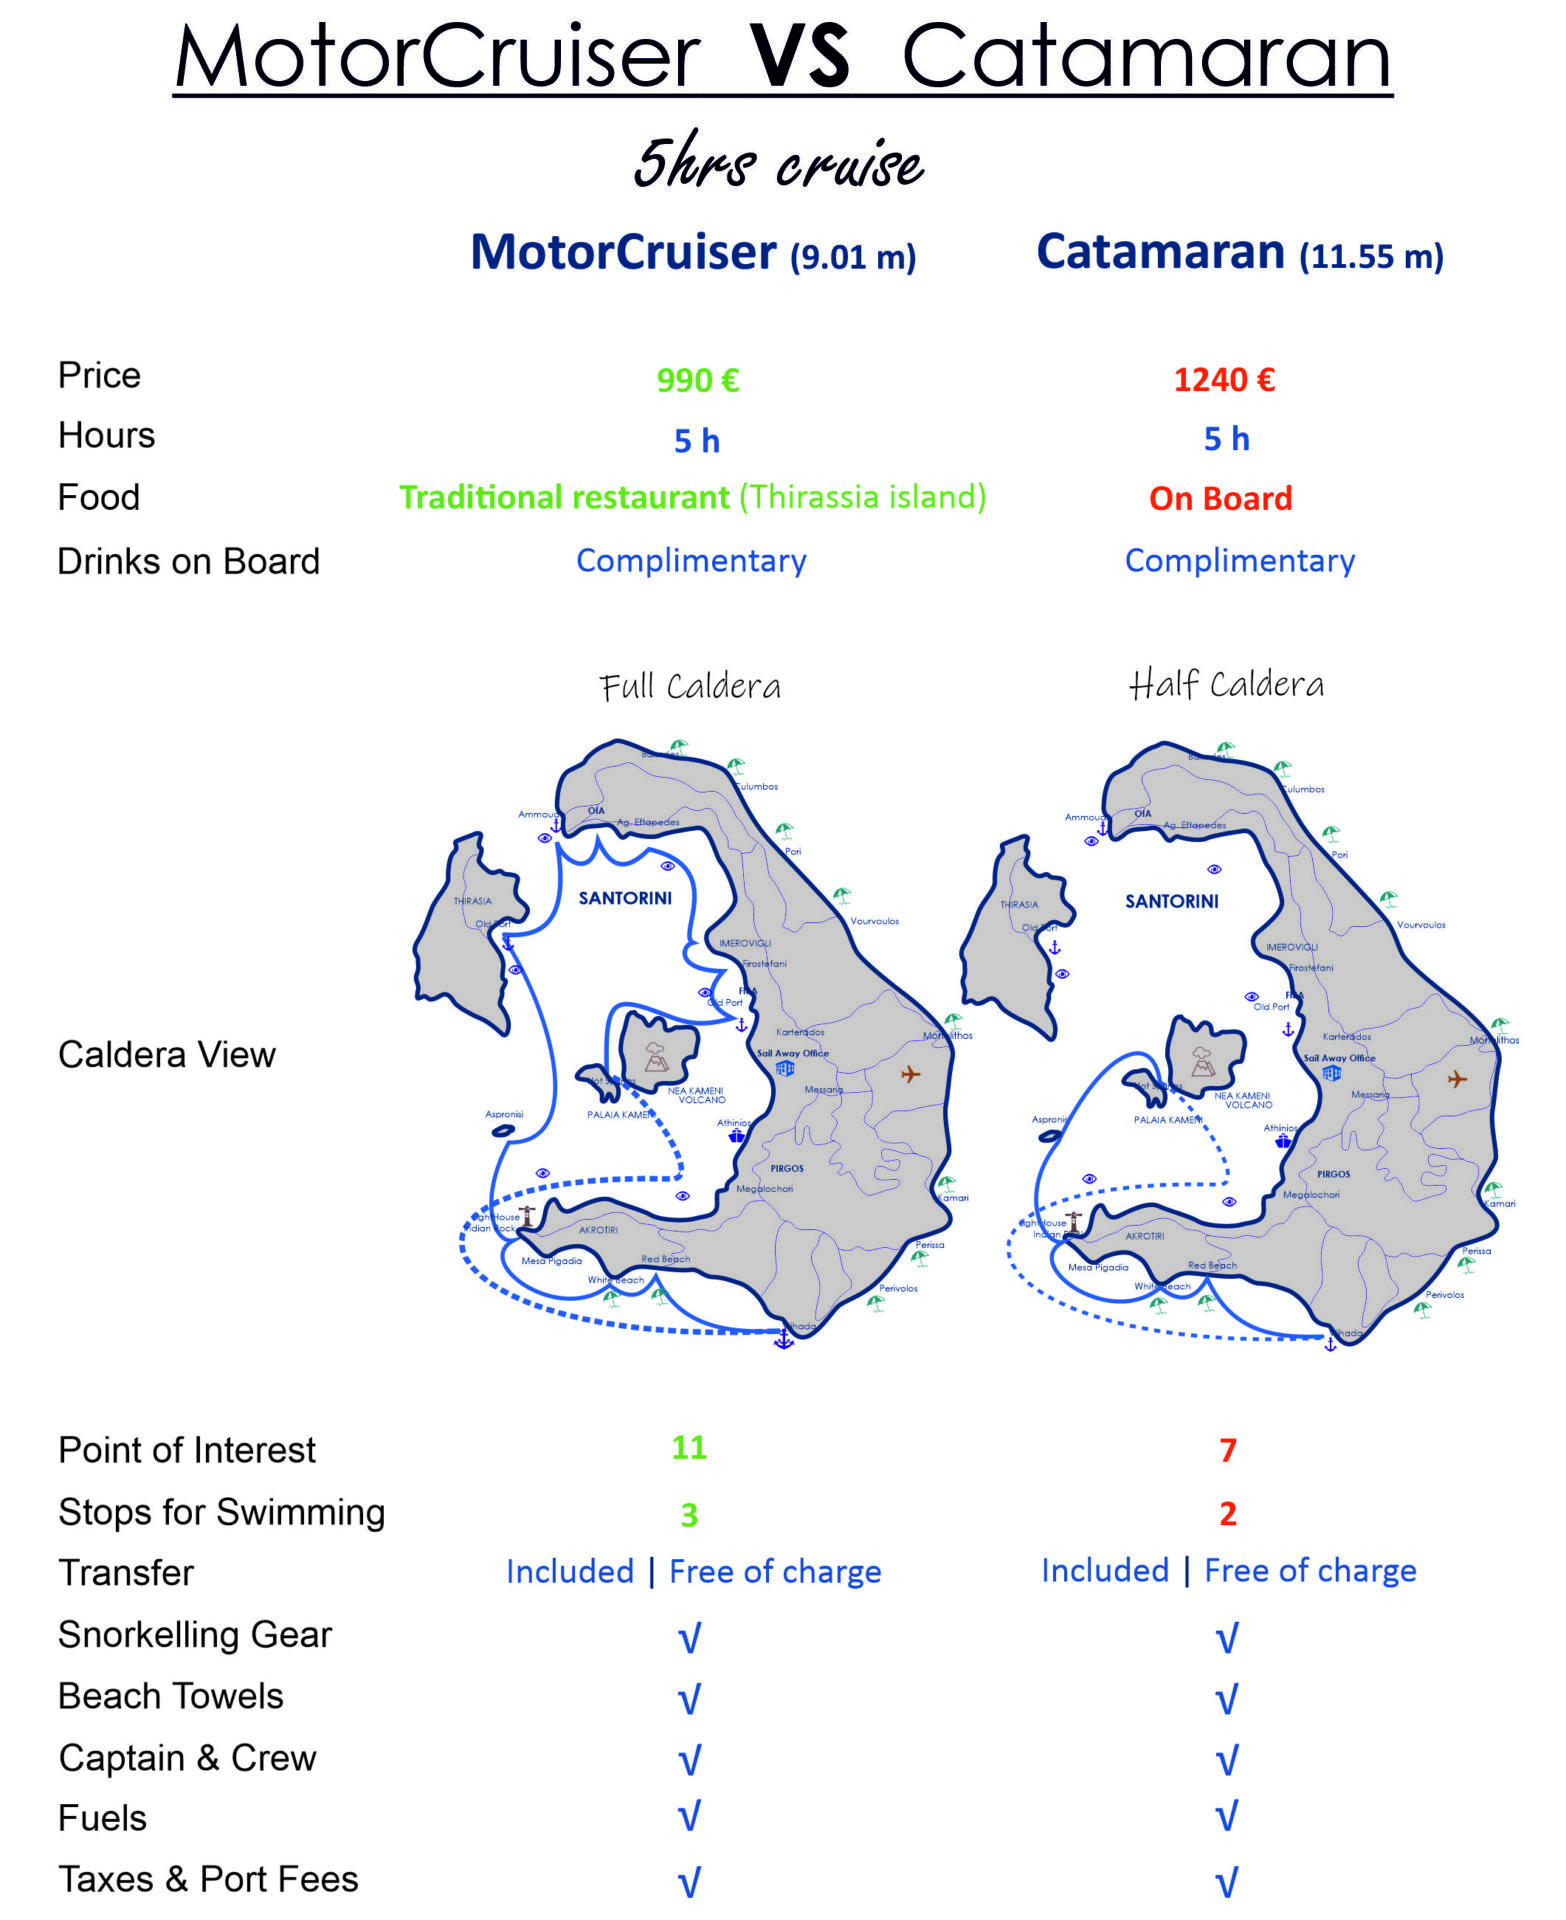 MotorCruiser VS Catamaran